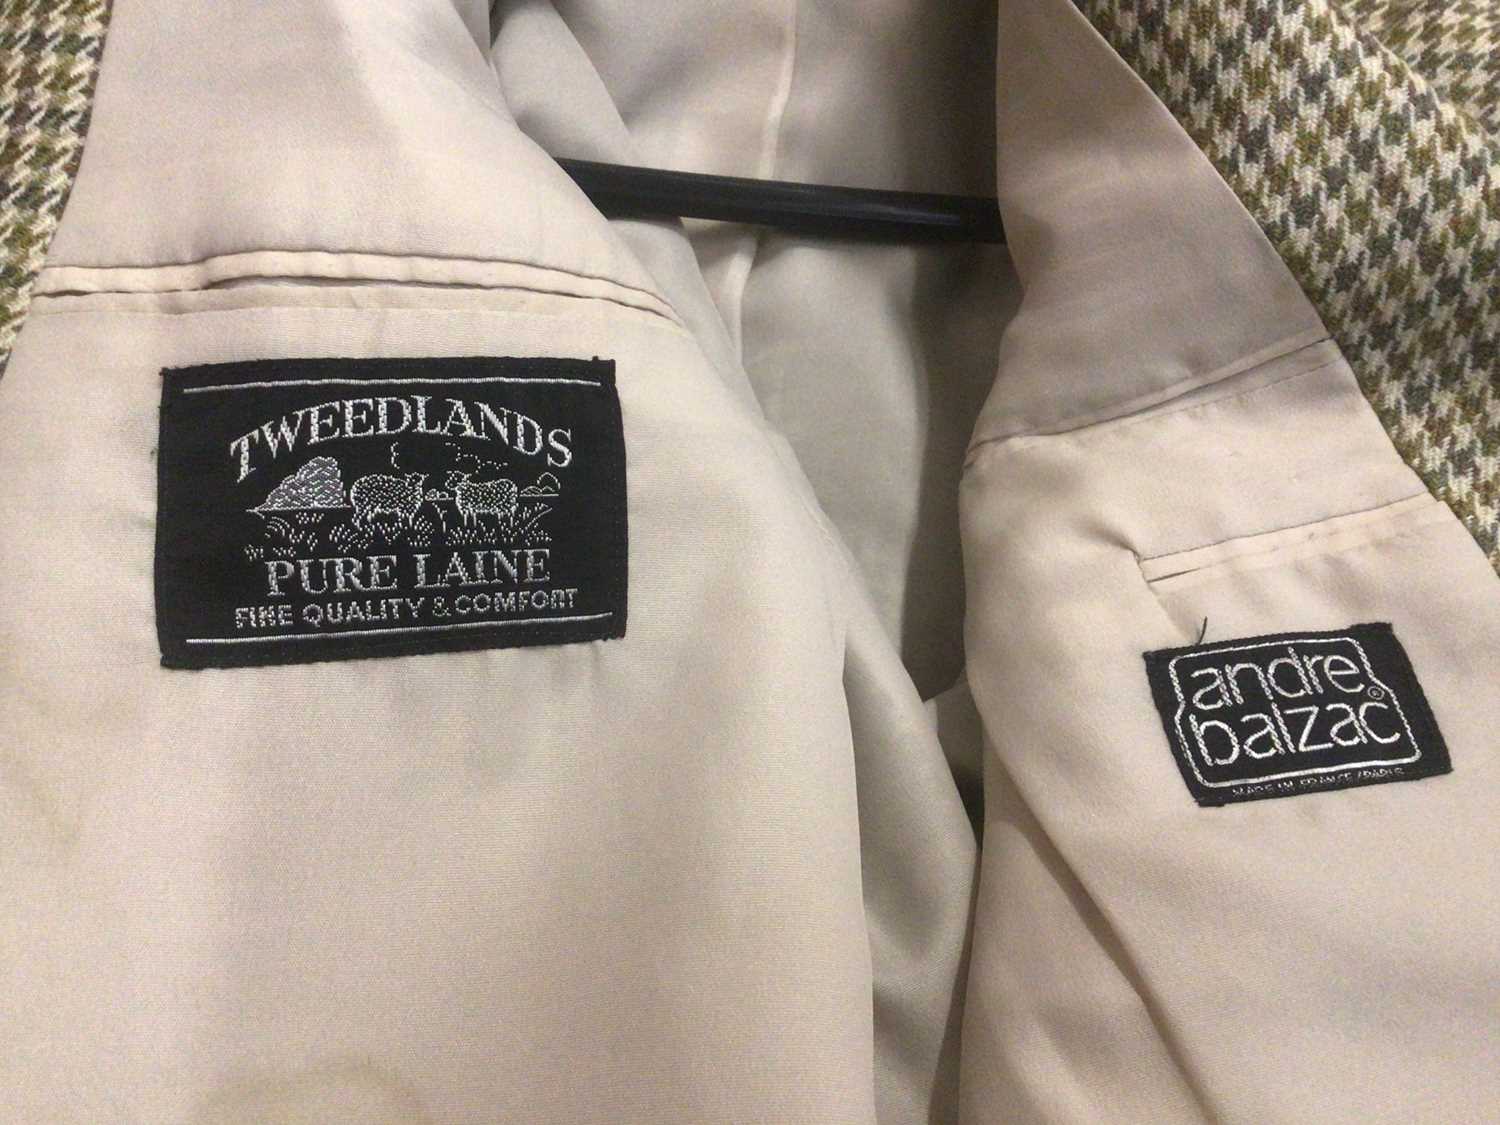 Gentlemen's wool tweed jackets makes include The Highlands, Santinelli Shetland, Andre Balzac Tweedl - Image 6 of 6